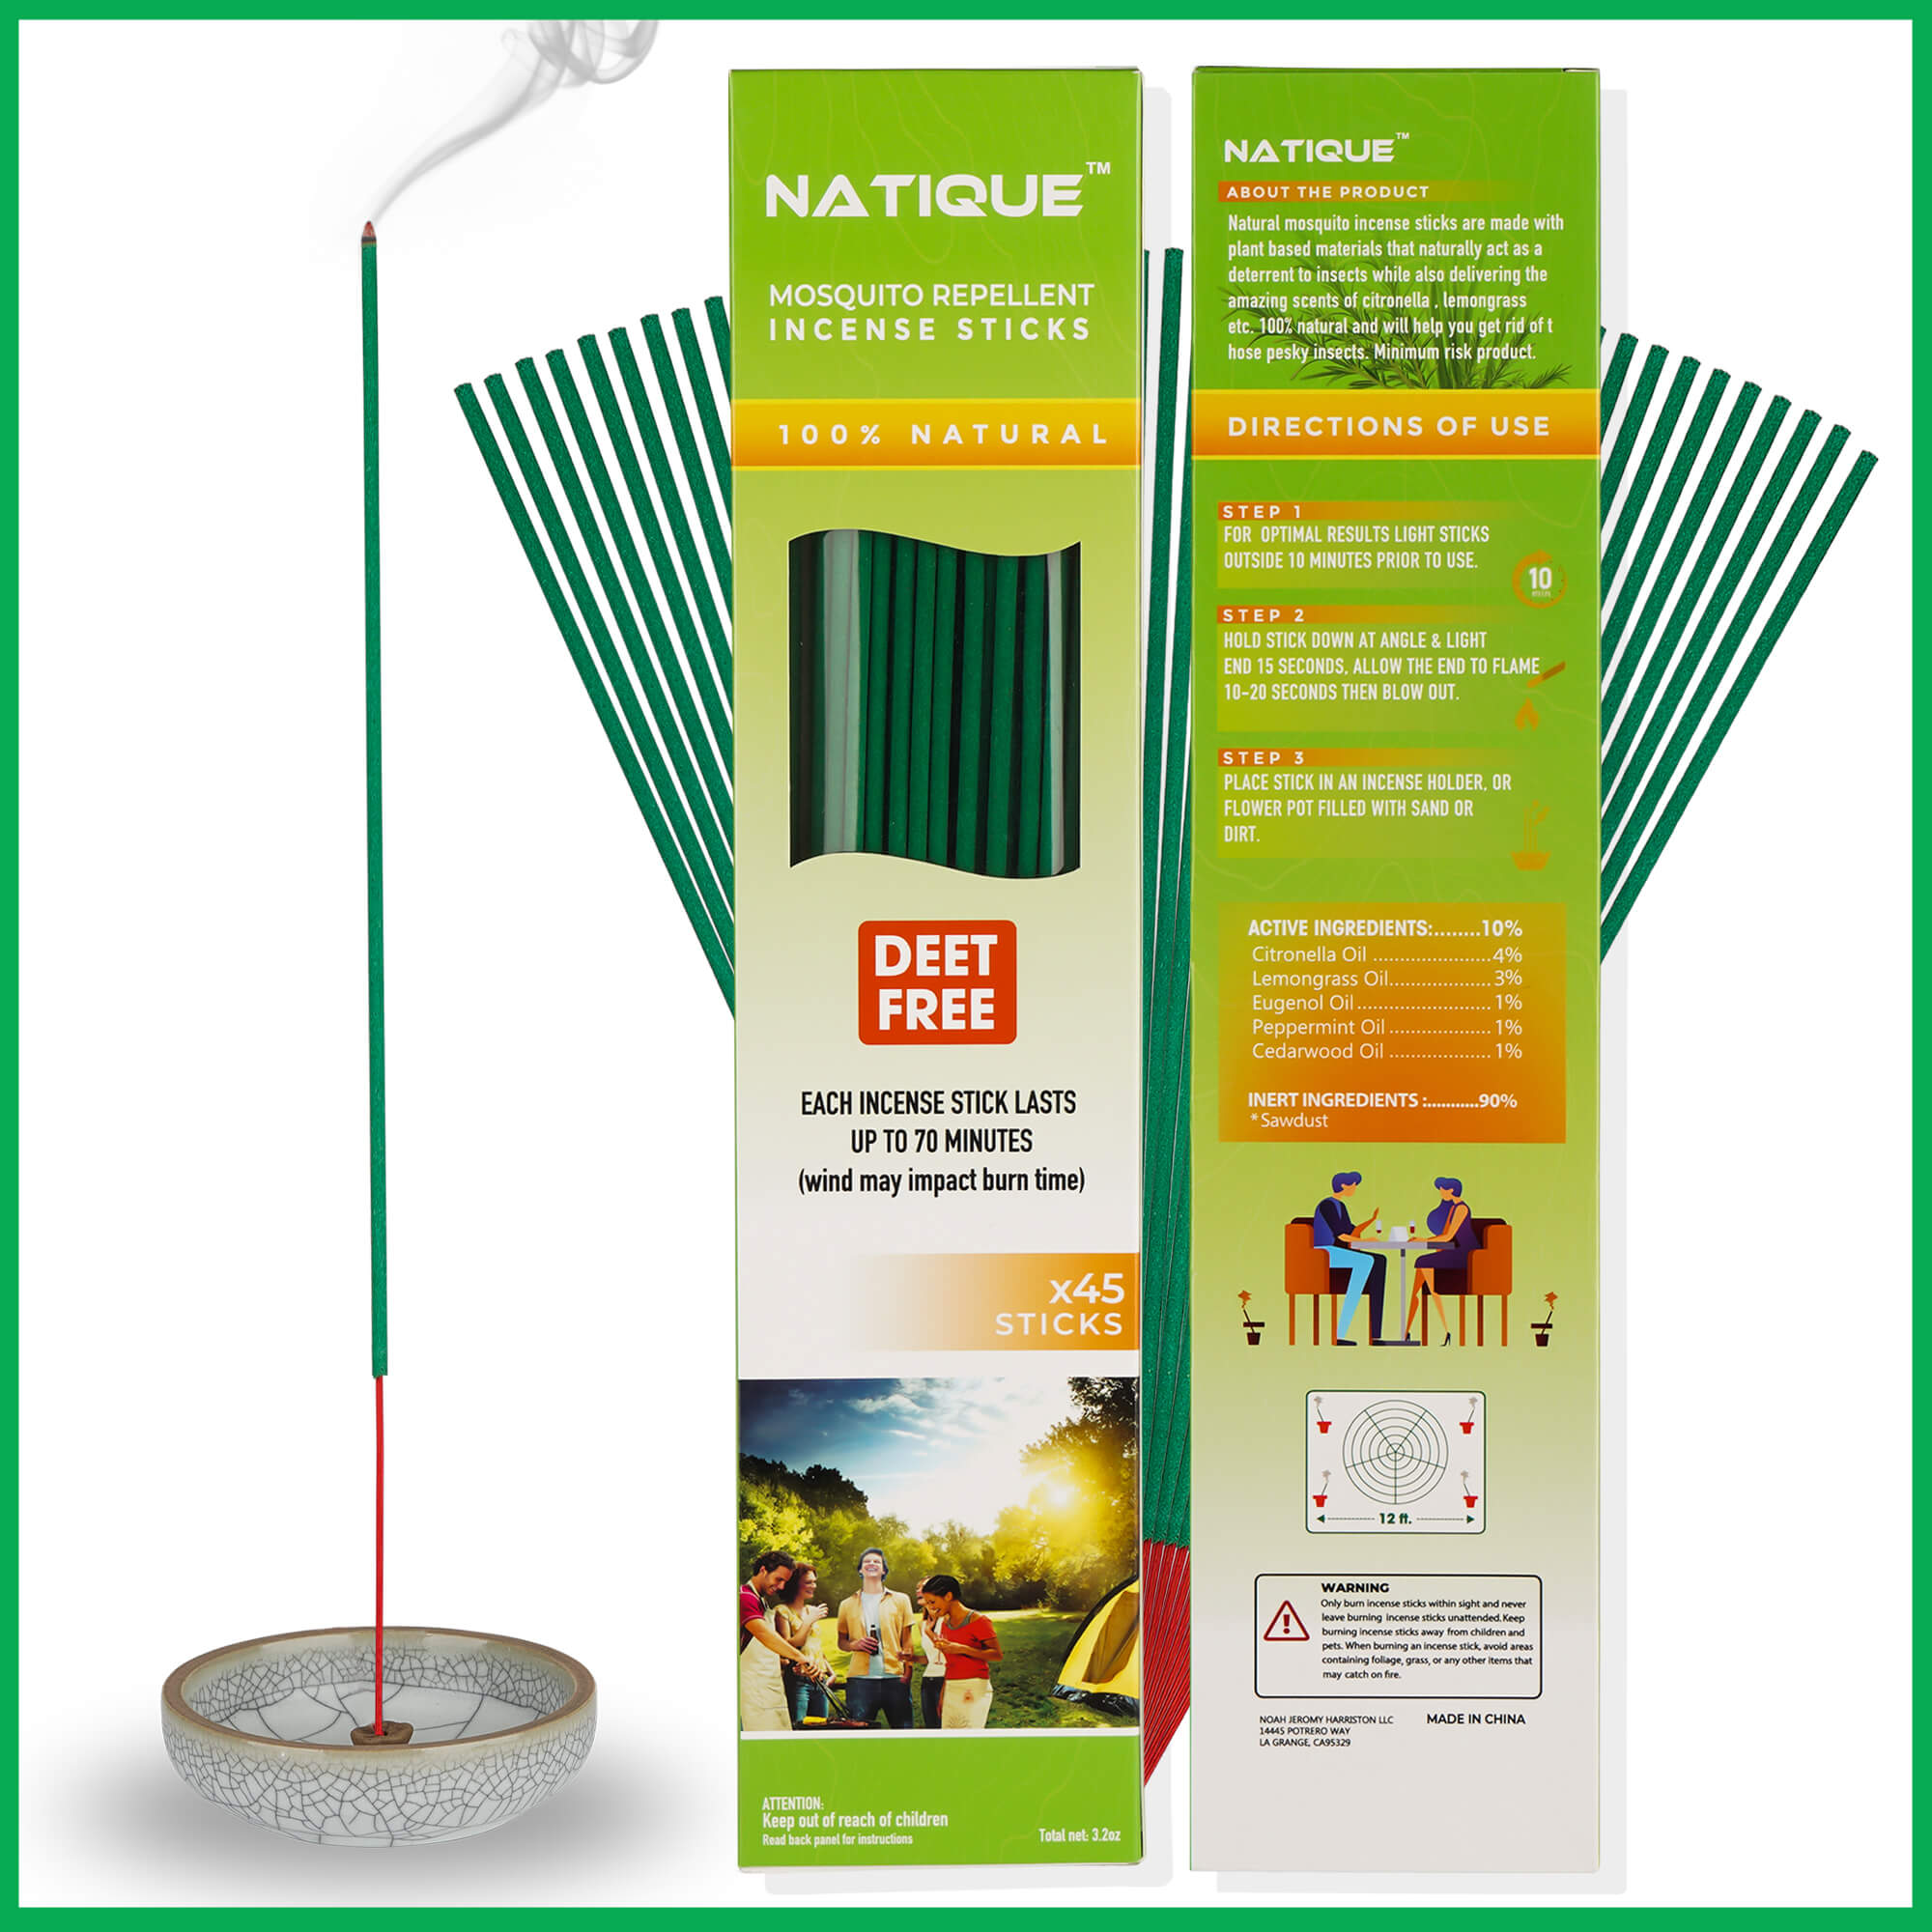 Natique’s Mini Mosquito Repellent Incense Sticks with Natural Ingredients